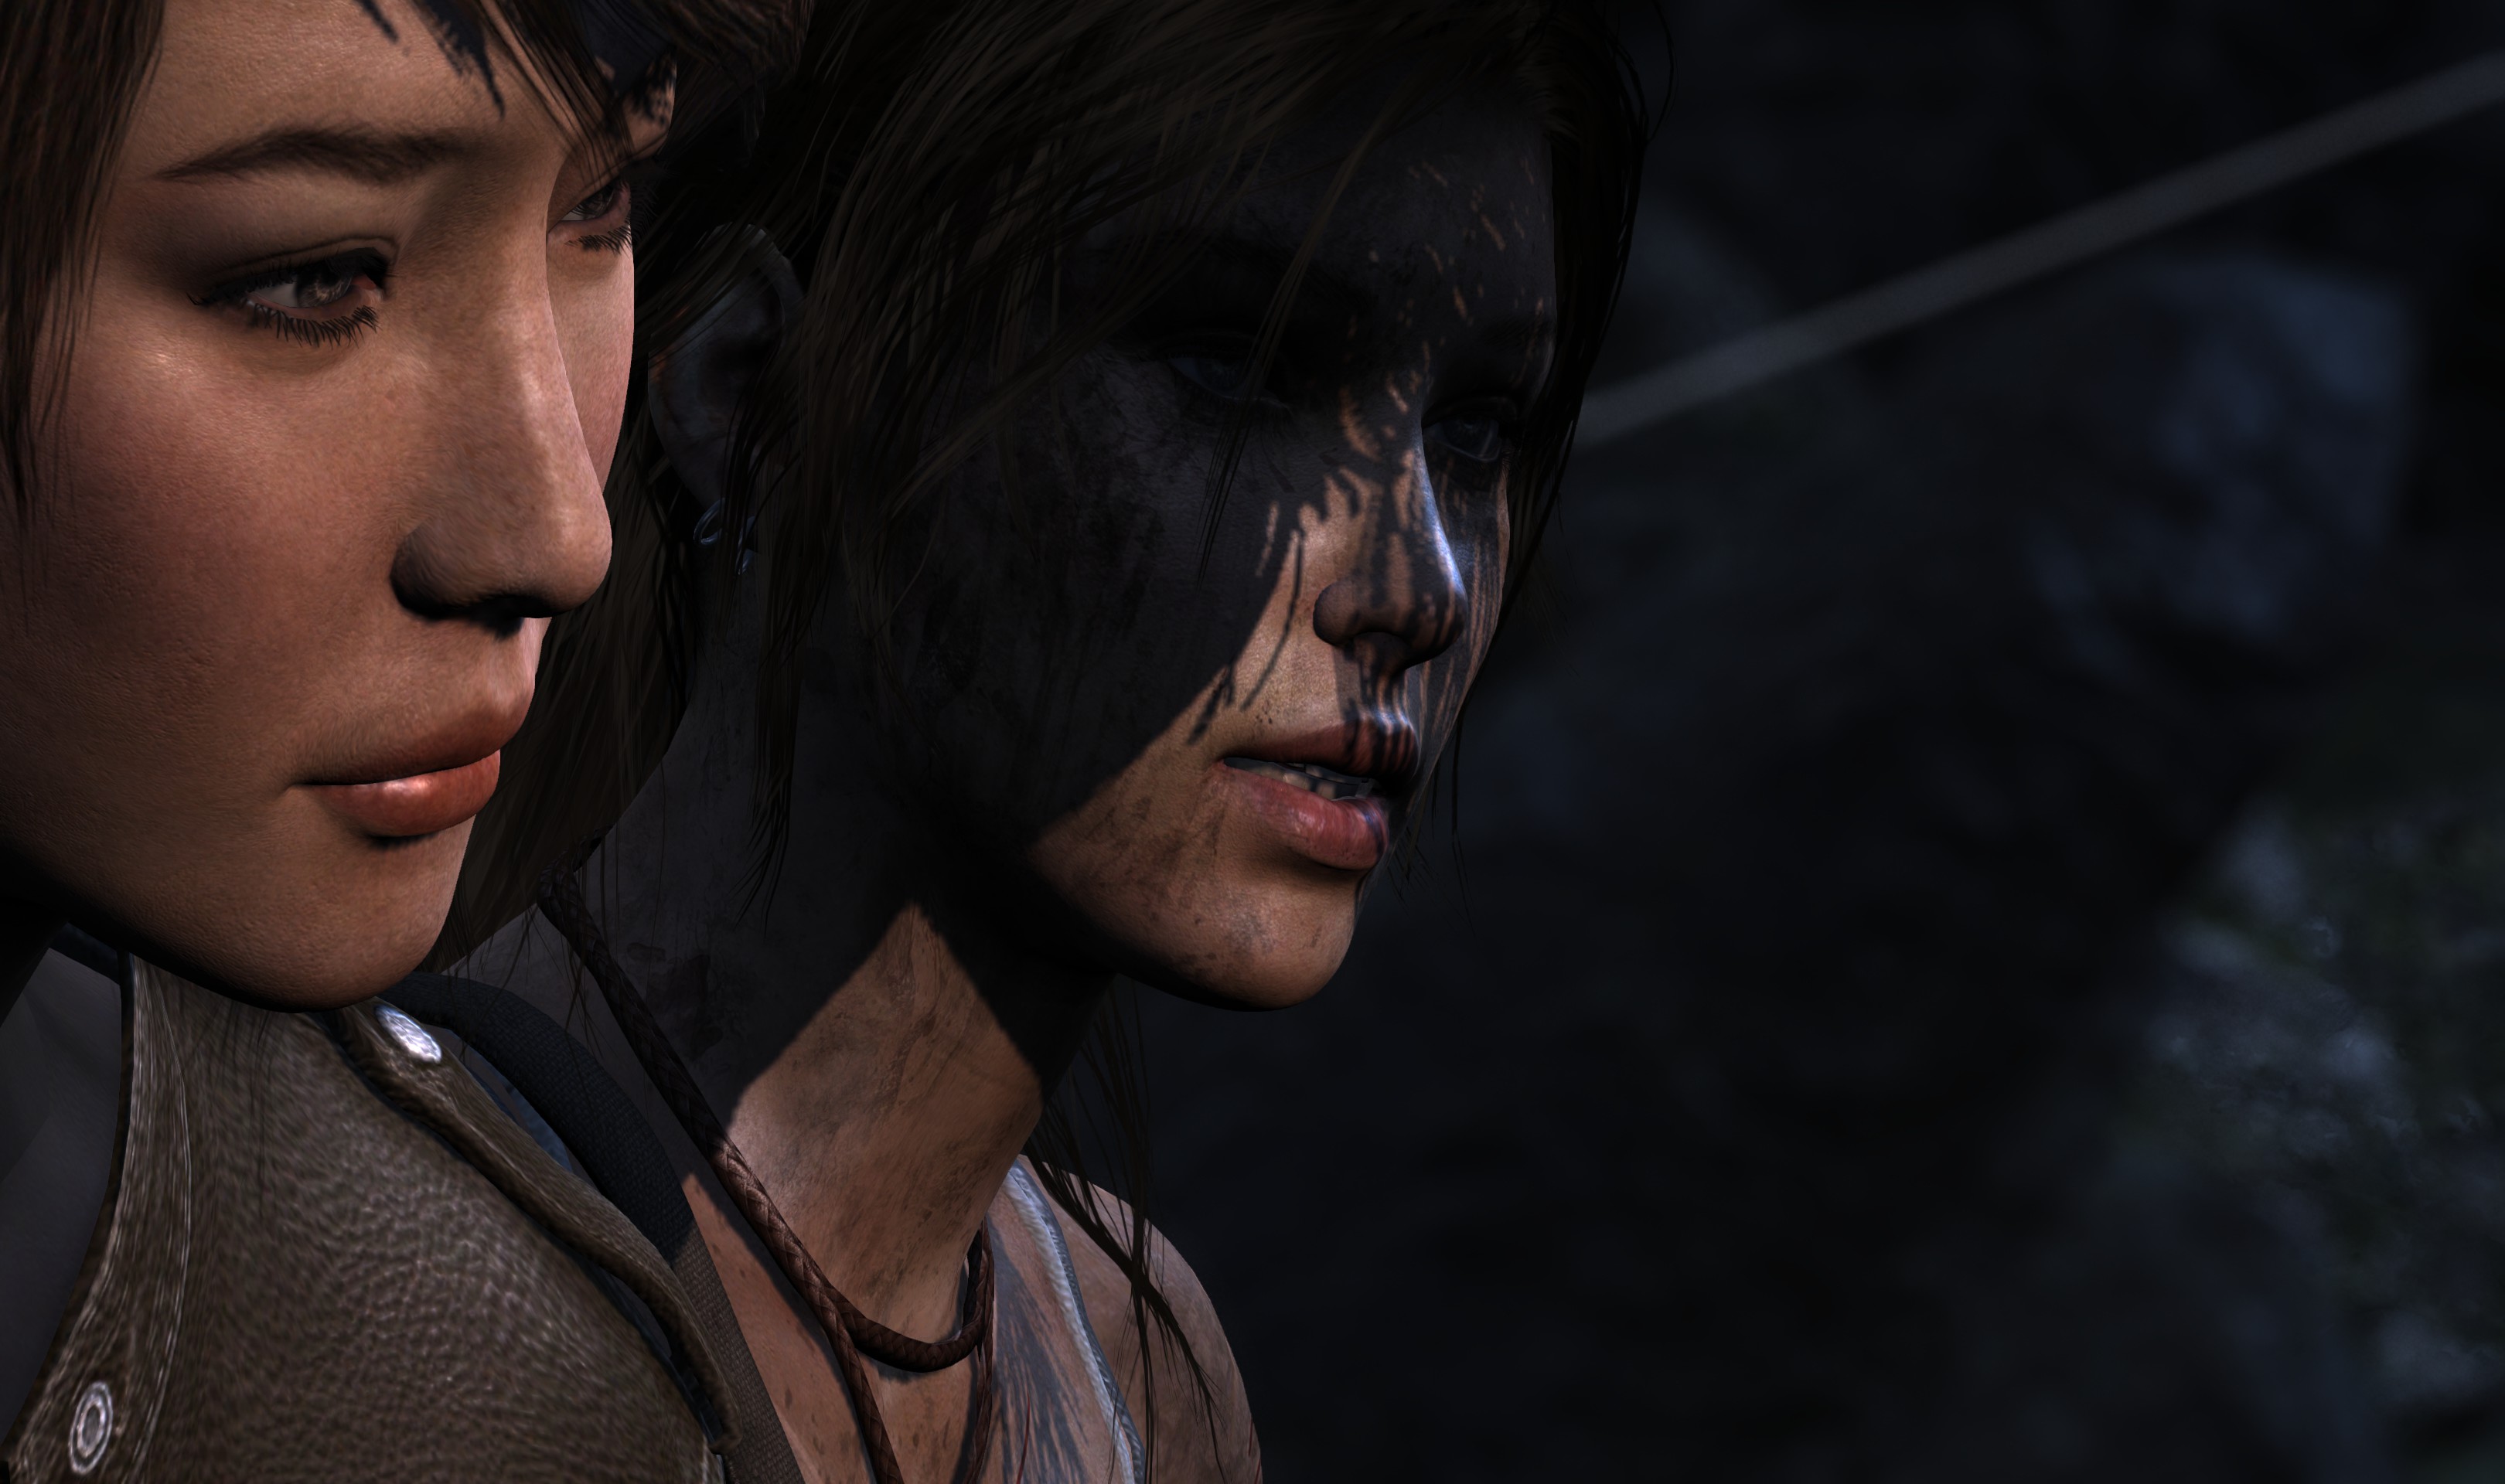 Tomb Raider Eyefinity Screenshots S Screens Max Settings